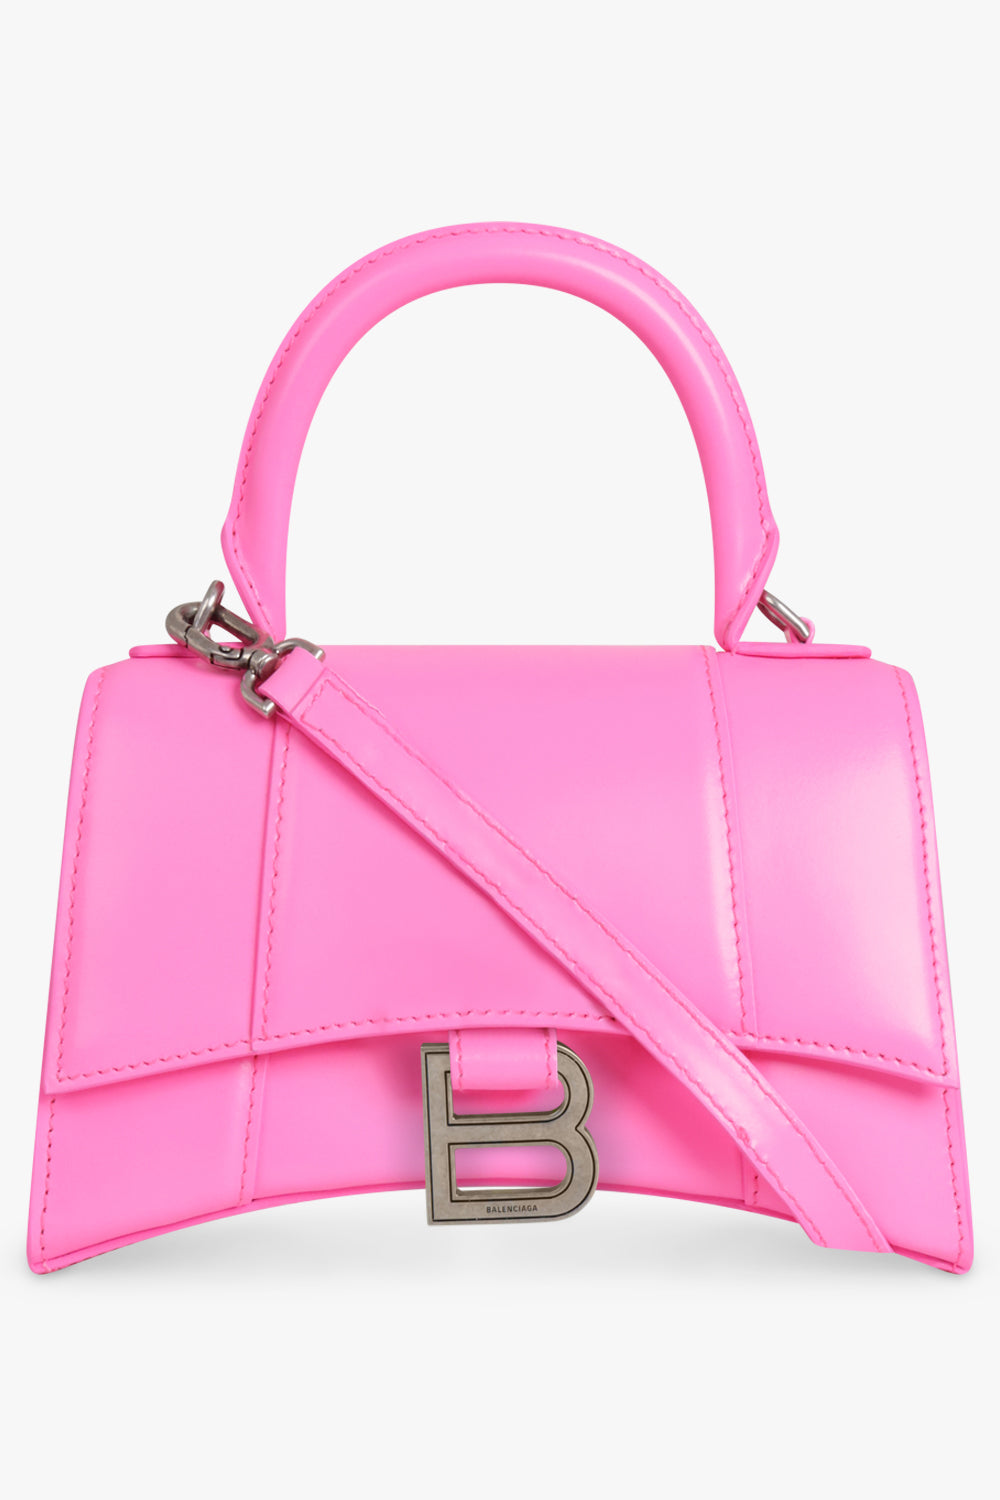 33 kuvaa aiheesta hot pink balenciaga bag